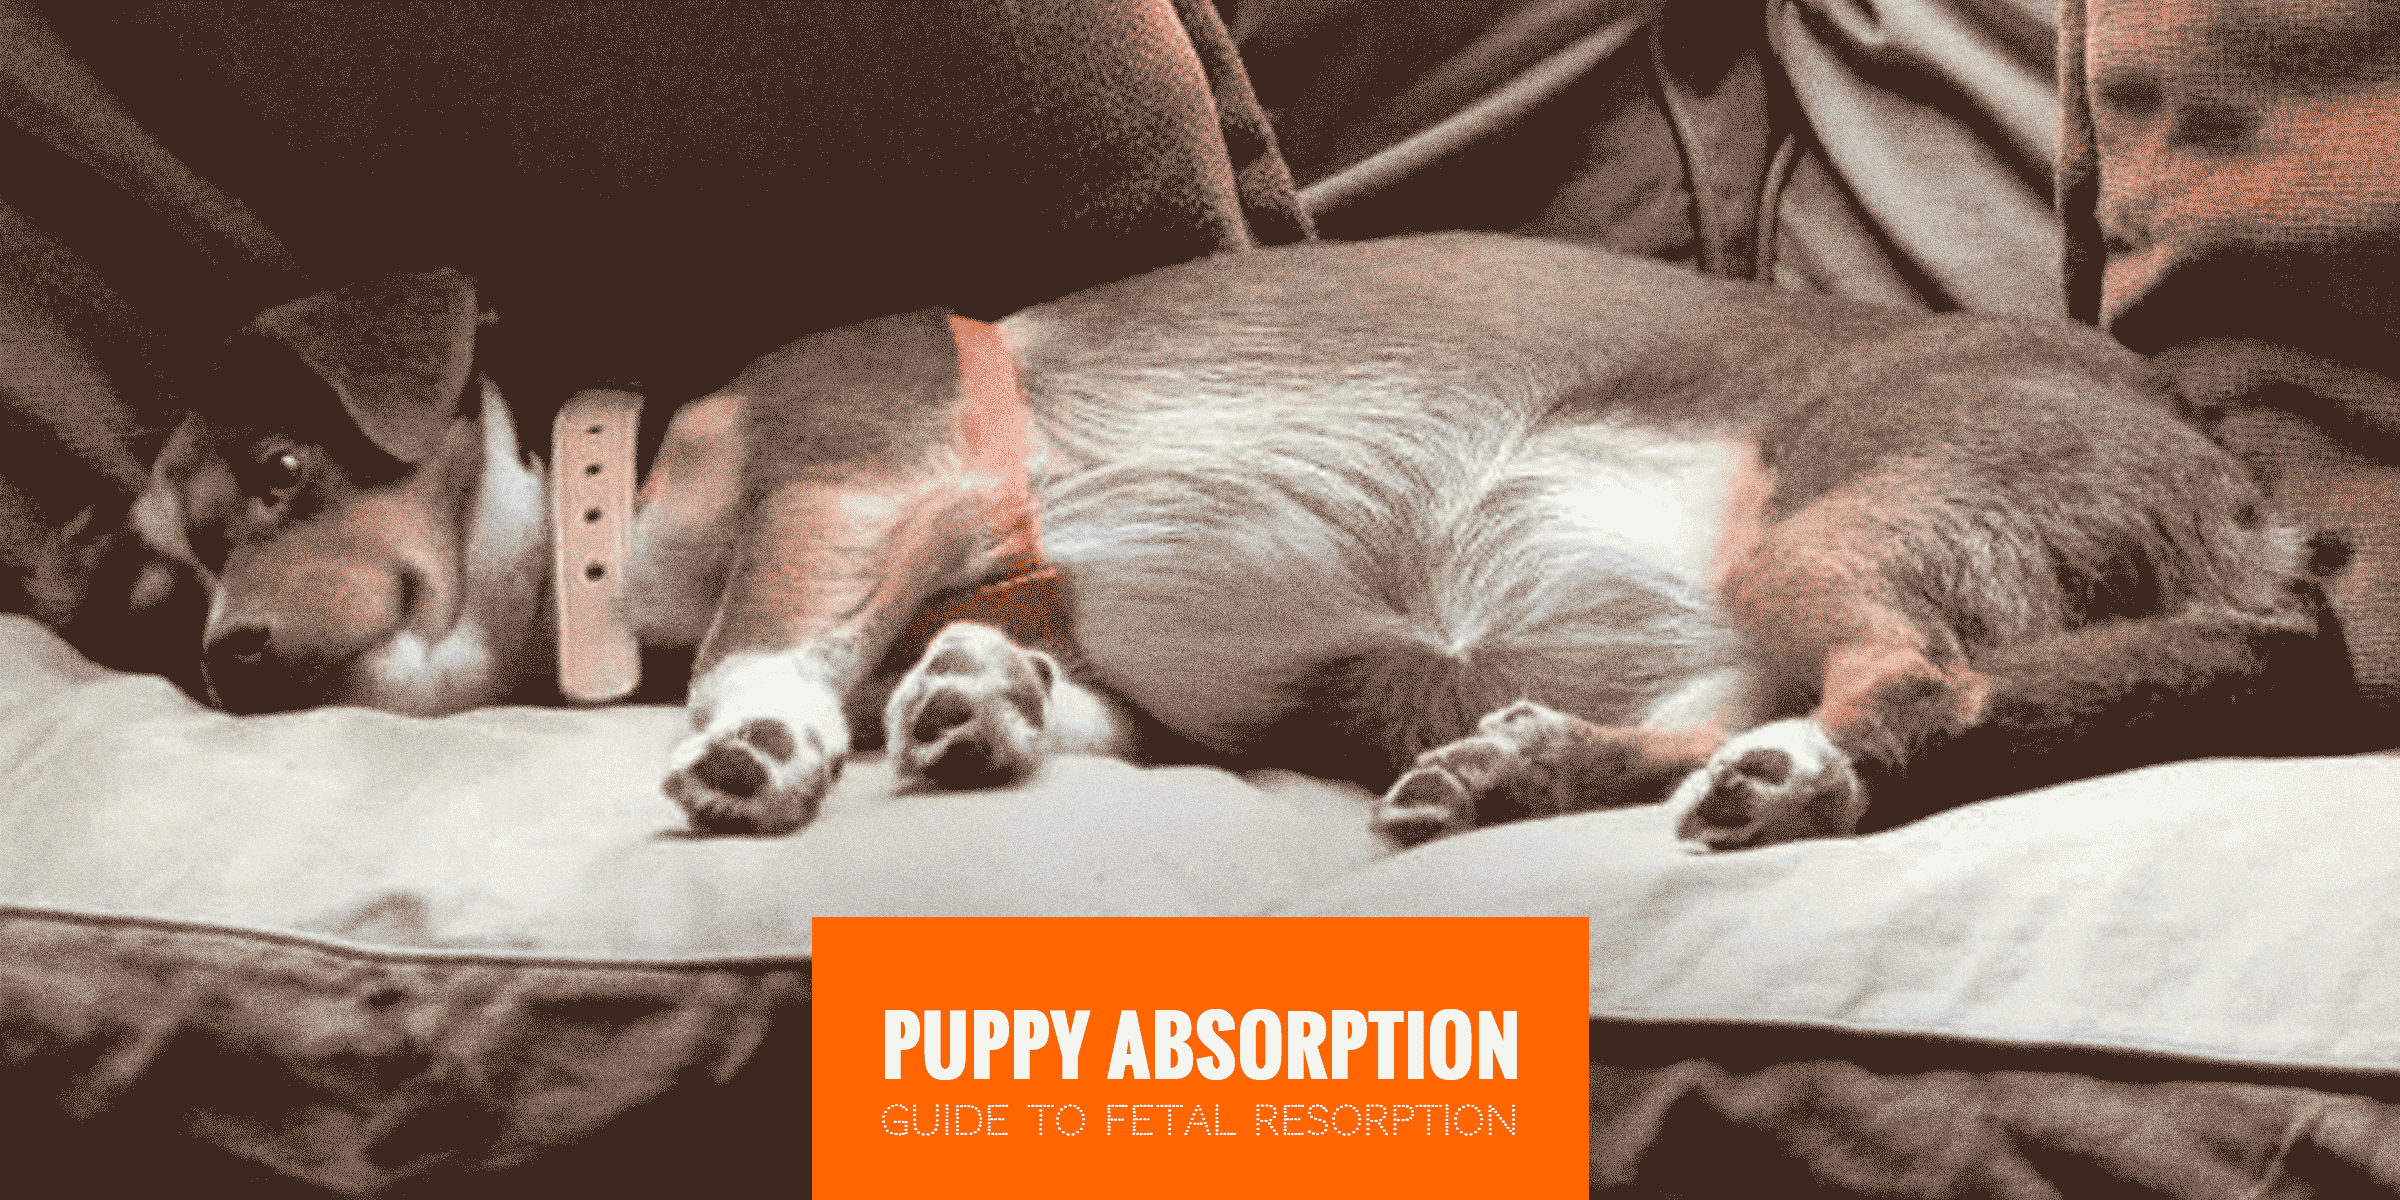 Puppy Absorption (Canine Fetal Resorption)